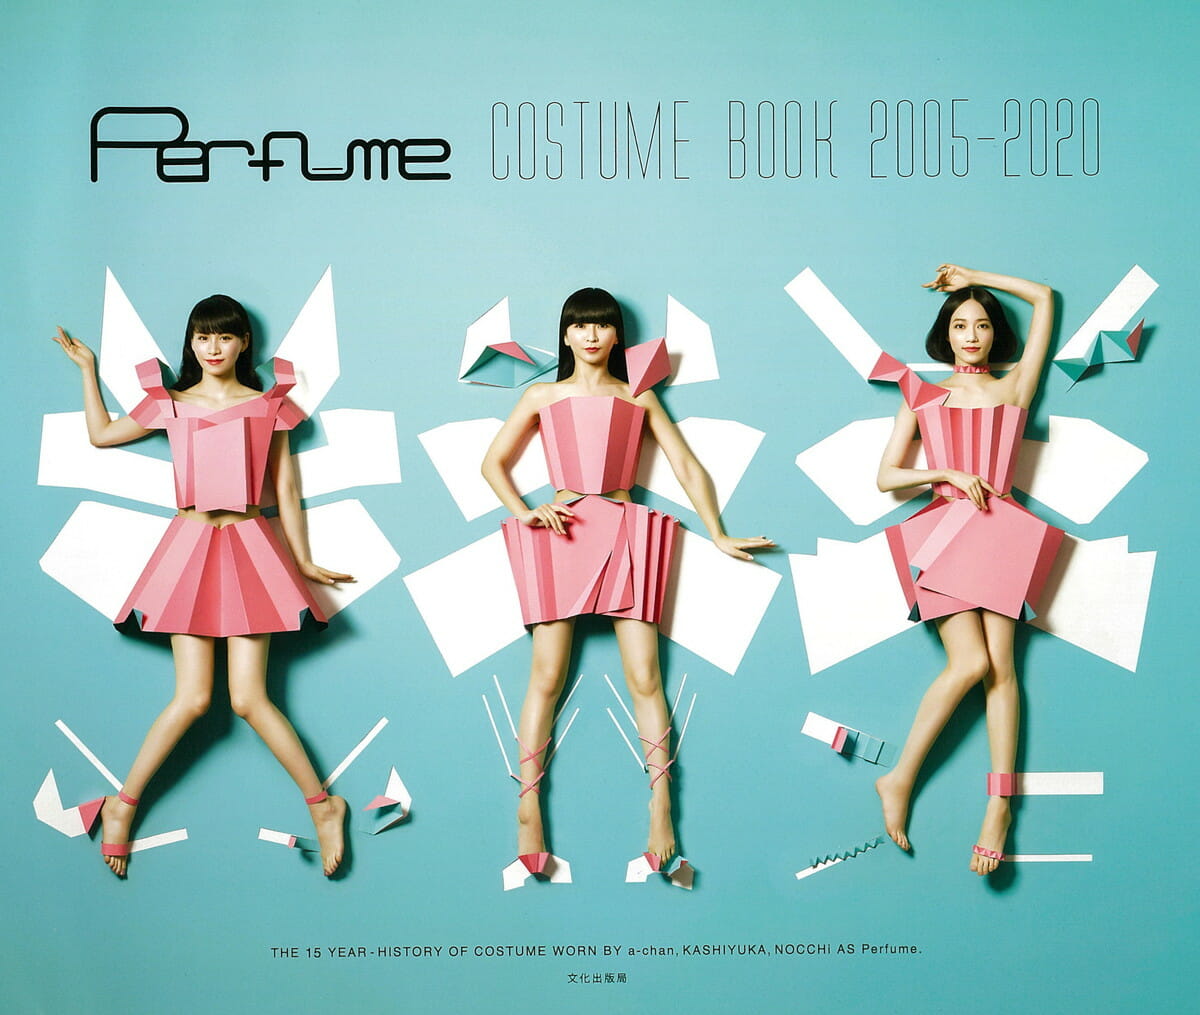 『Perfume COSTUME BOOK 2005-2020』表紙 『装苑』編集部 編、文化出版局刊